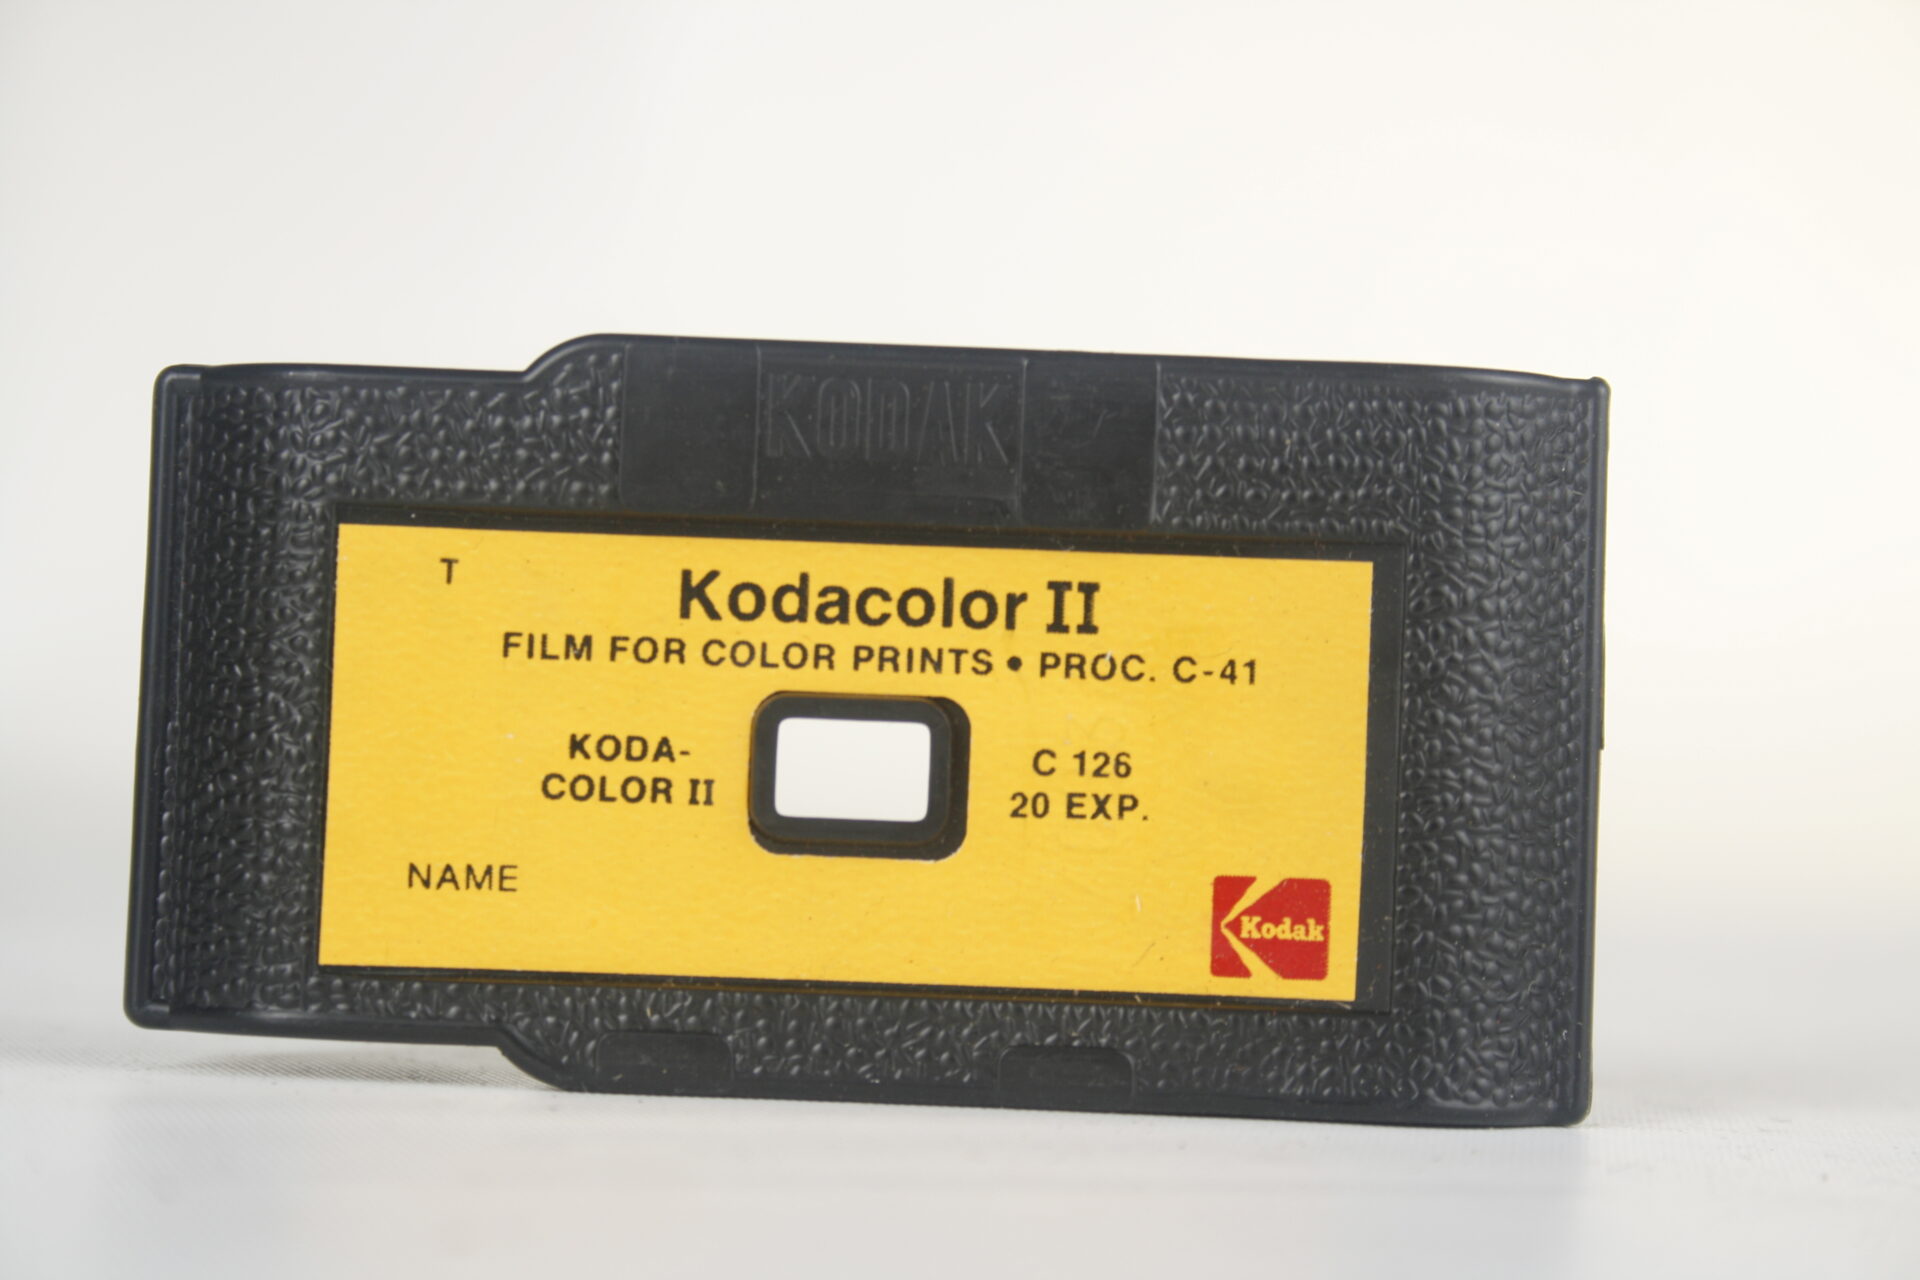 Kodak film cartridge. Kodacolor II, 126 film. 1973-1984